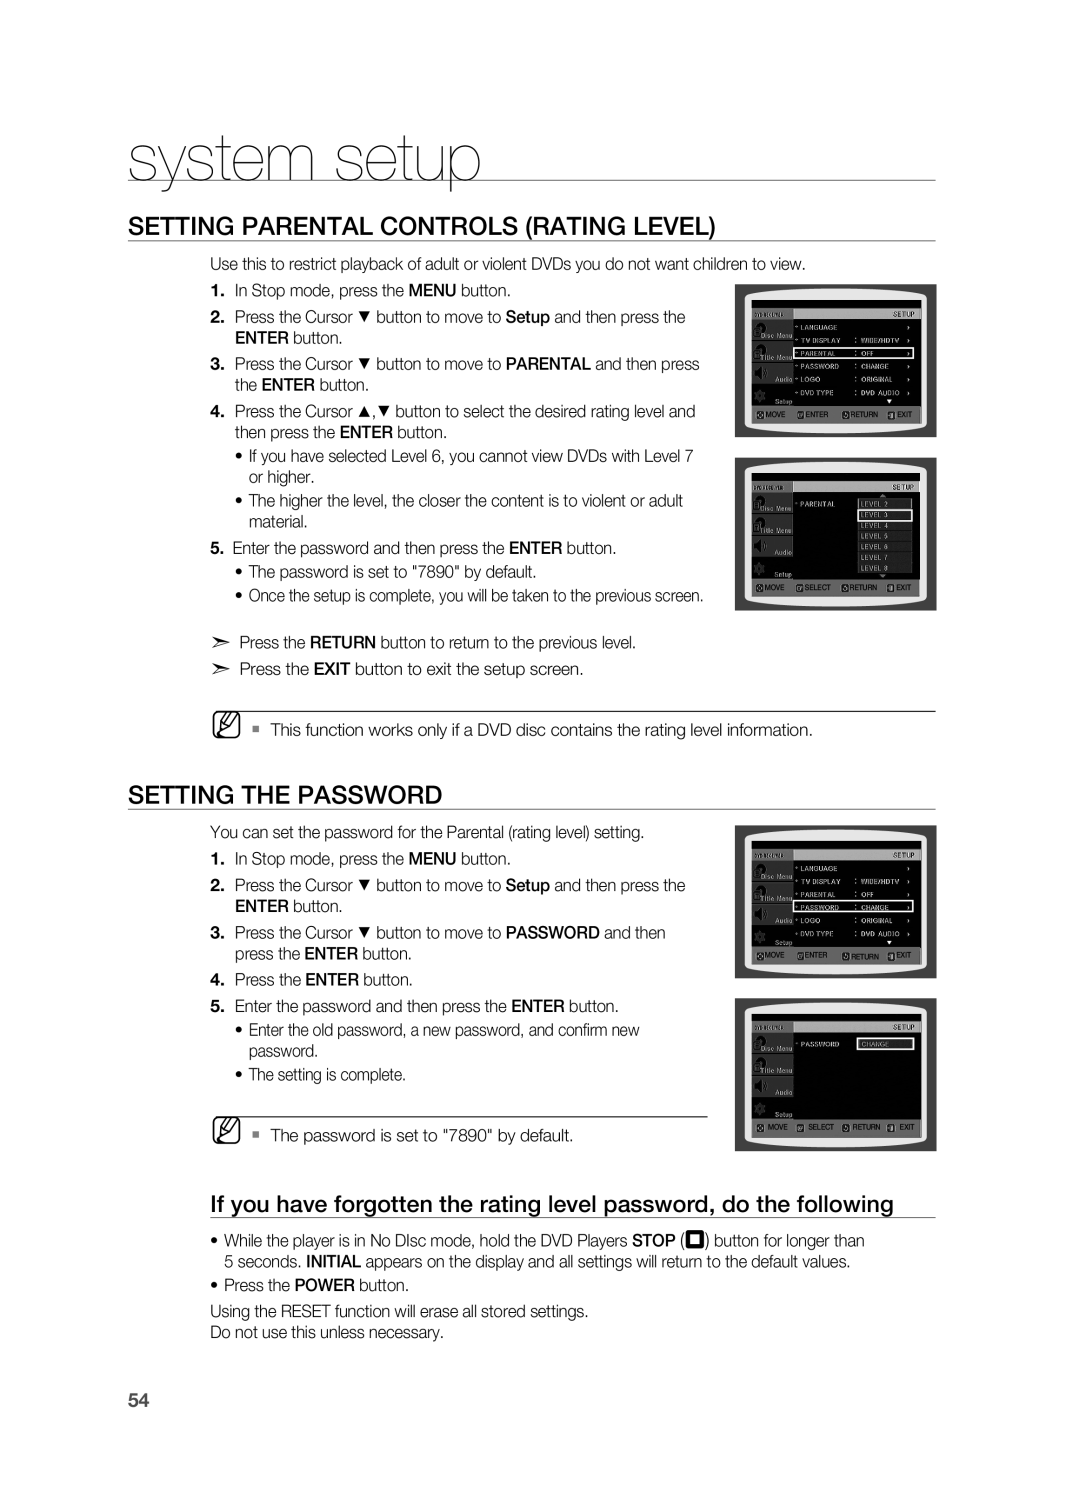 Samsung HT-Z510 manual Setting Parental Controls Rating Level, Setting the Password, system setup 